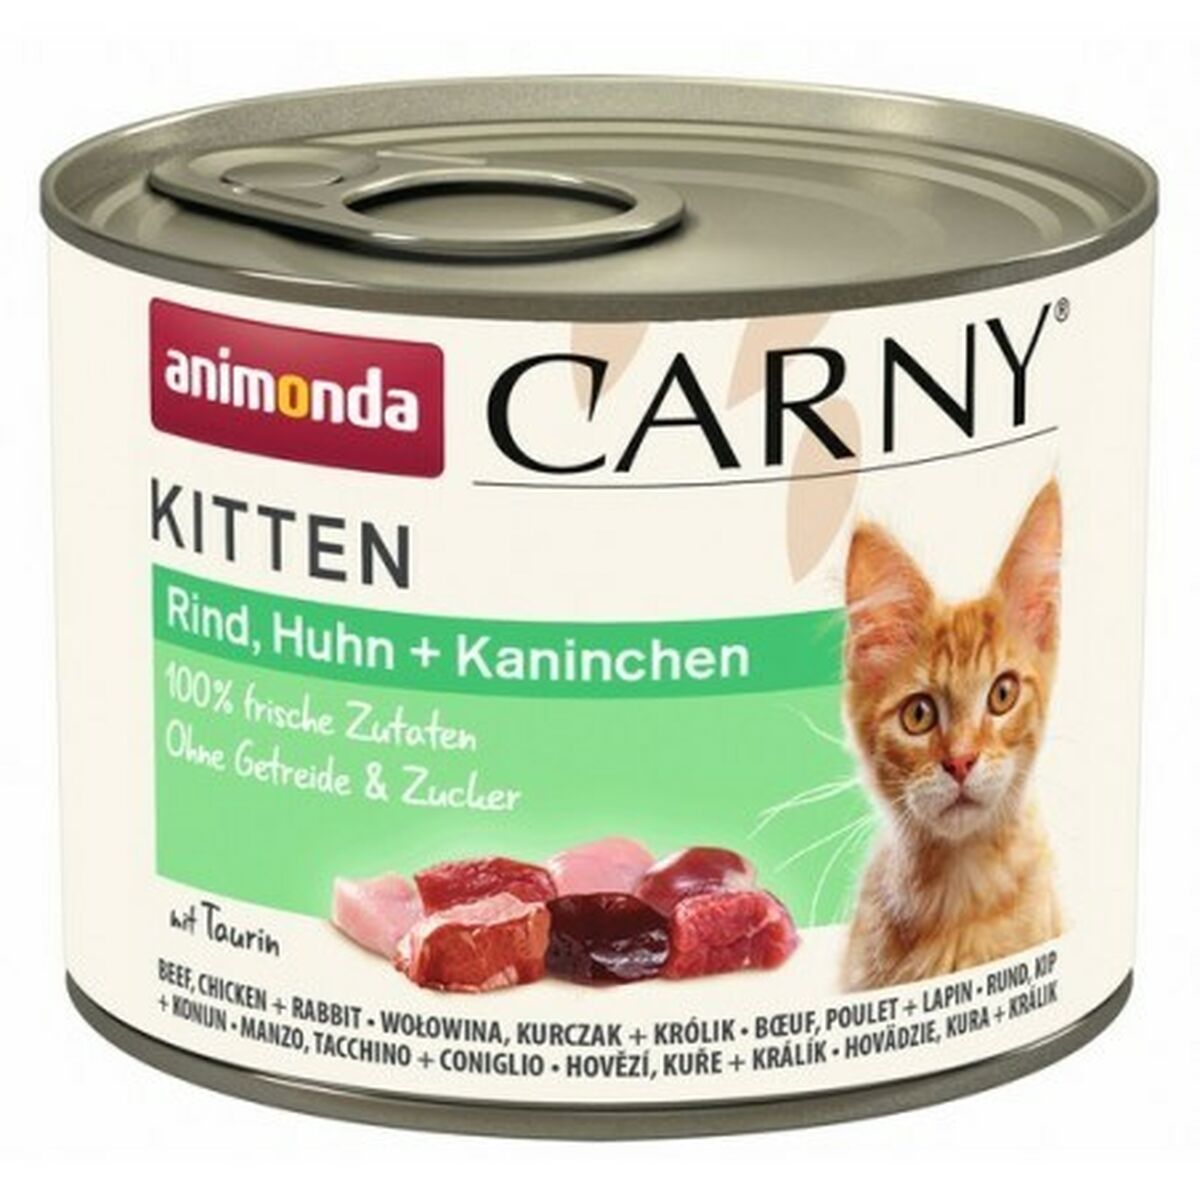 Aliments pour chat Animonda Carny Kitten Poulet Veau